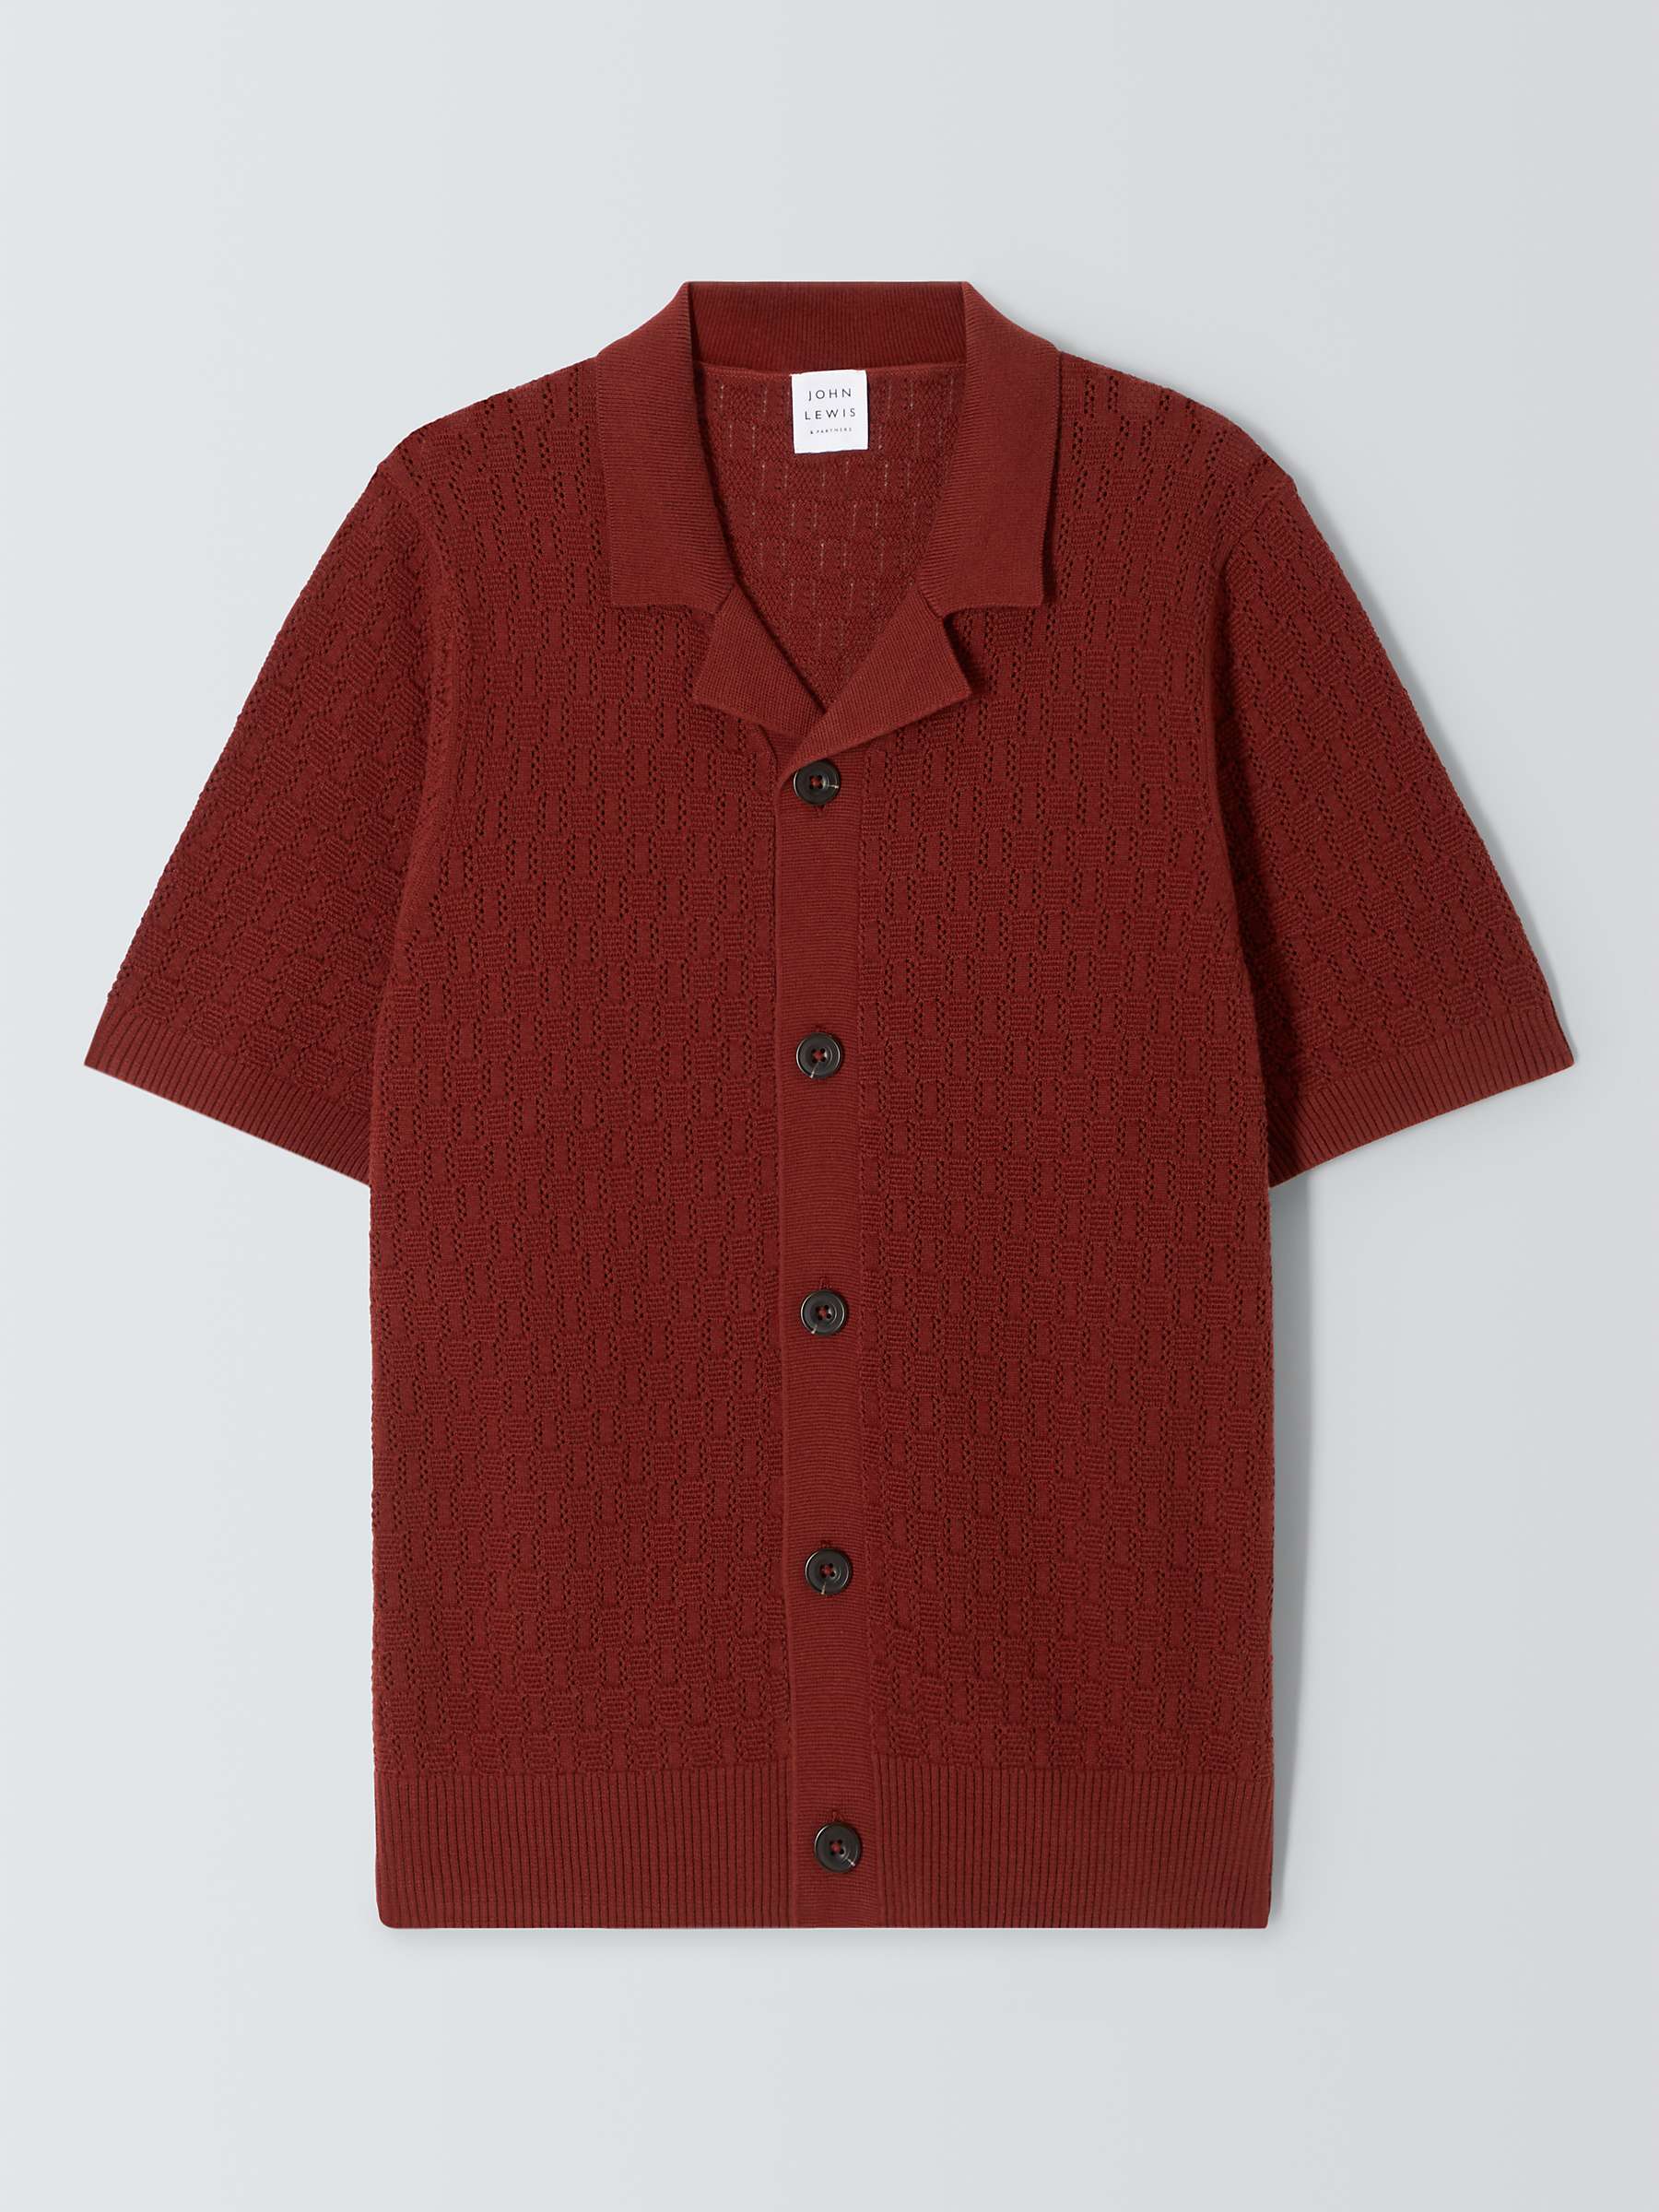 Buy John Lewis Short Sleeve Open Knit Shirt Online at johnlewis.com